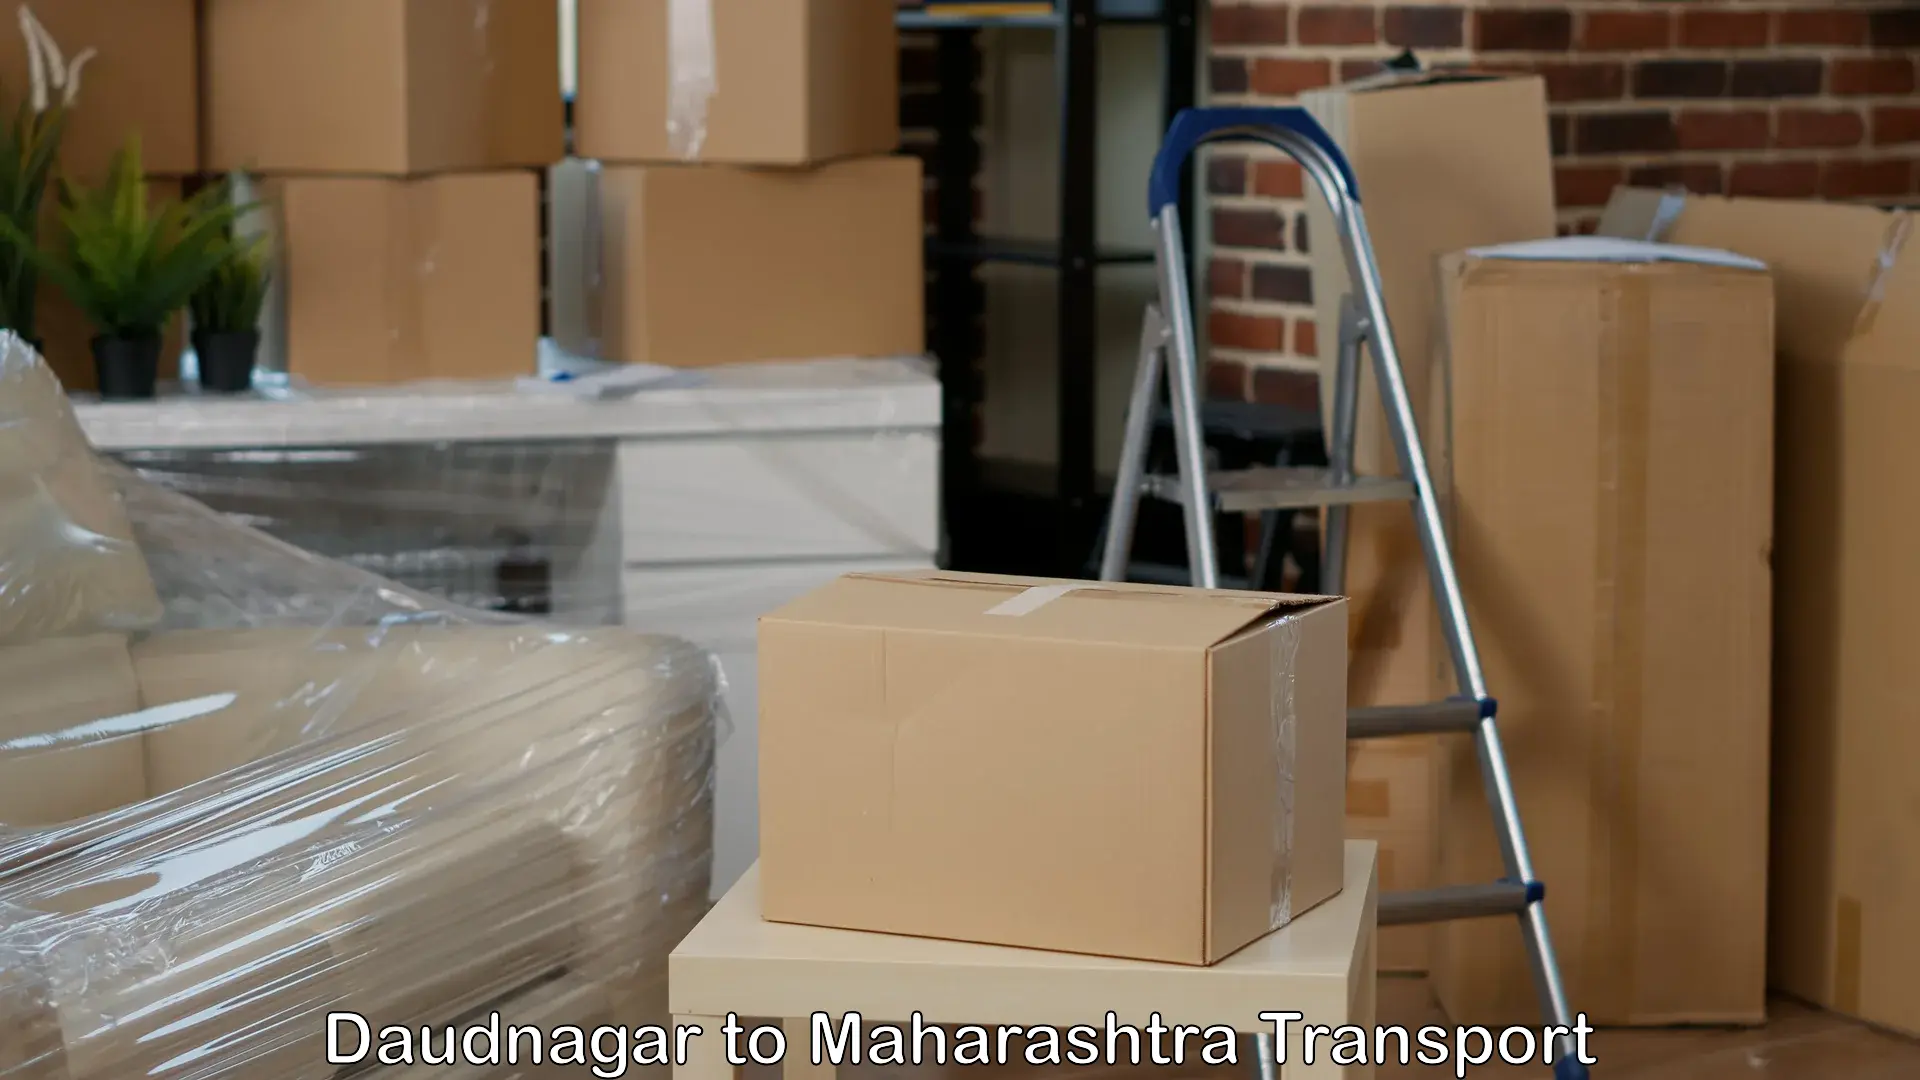 Daily parcel service transport in Daudnagar to Virar